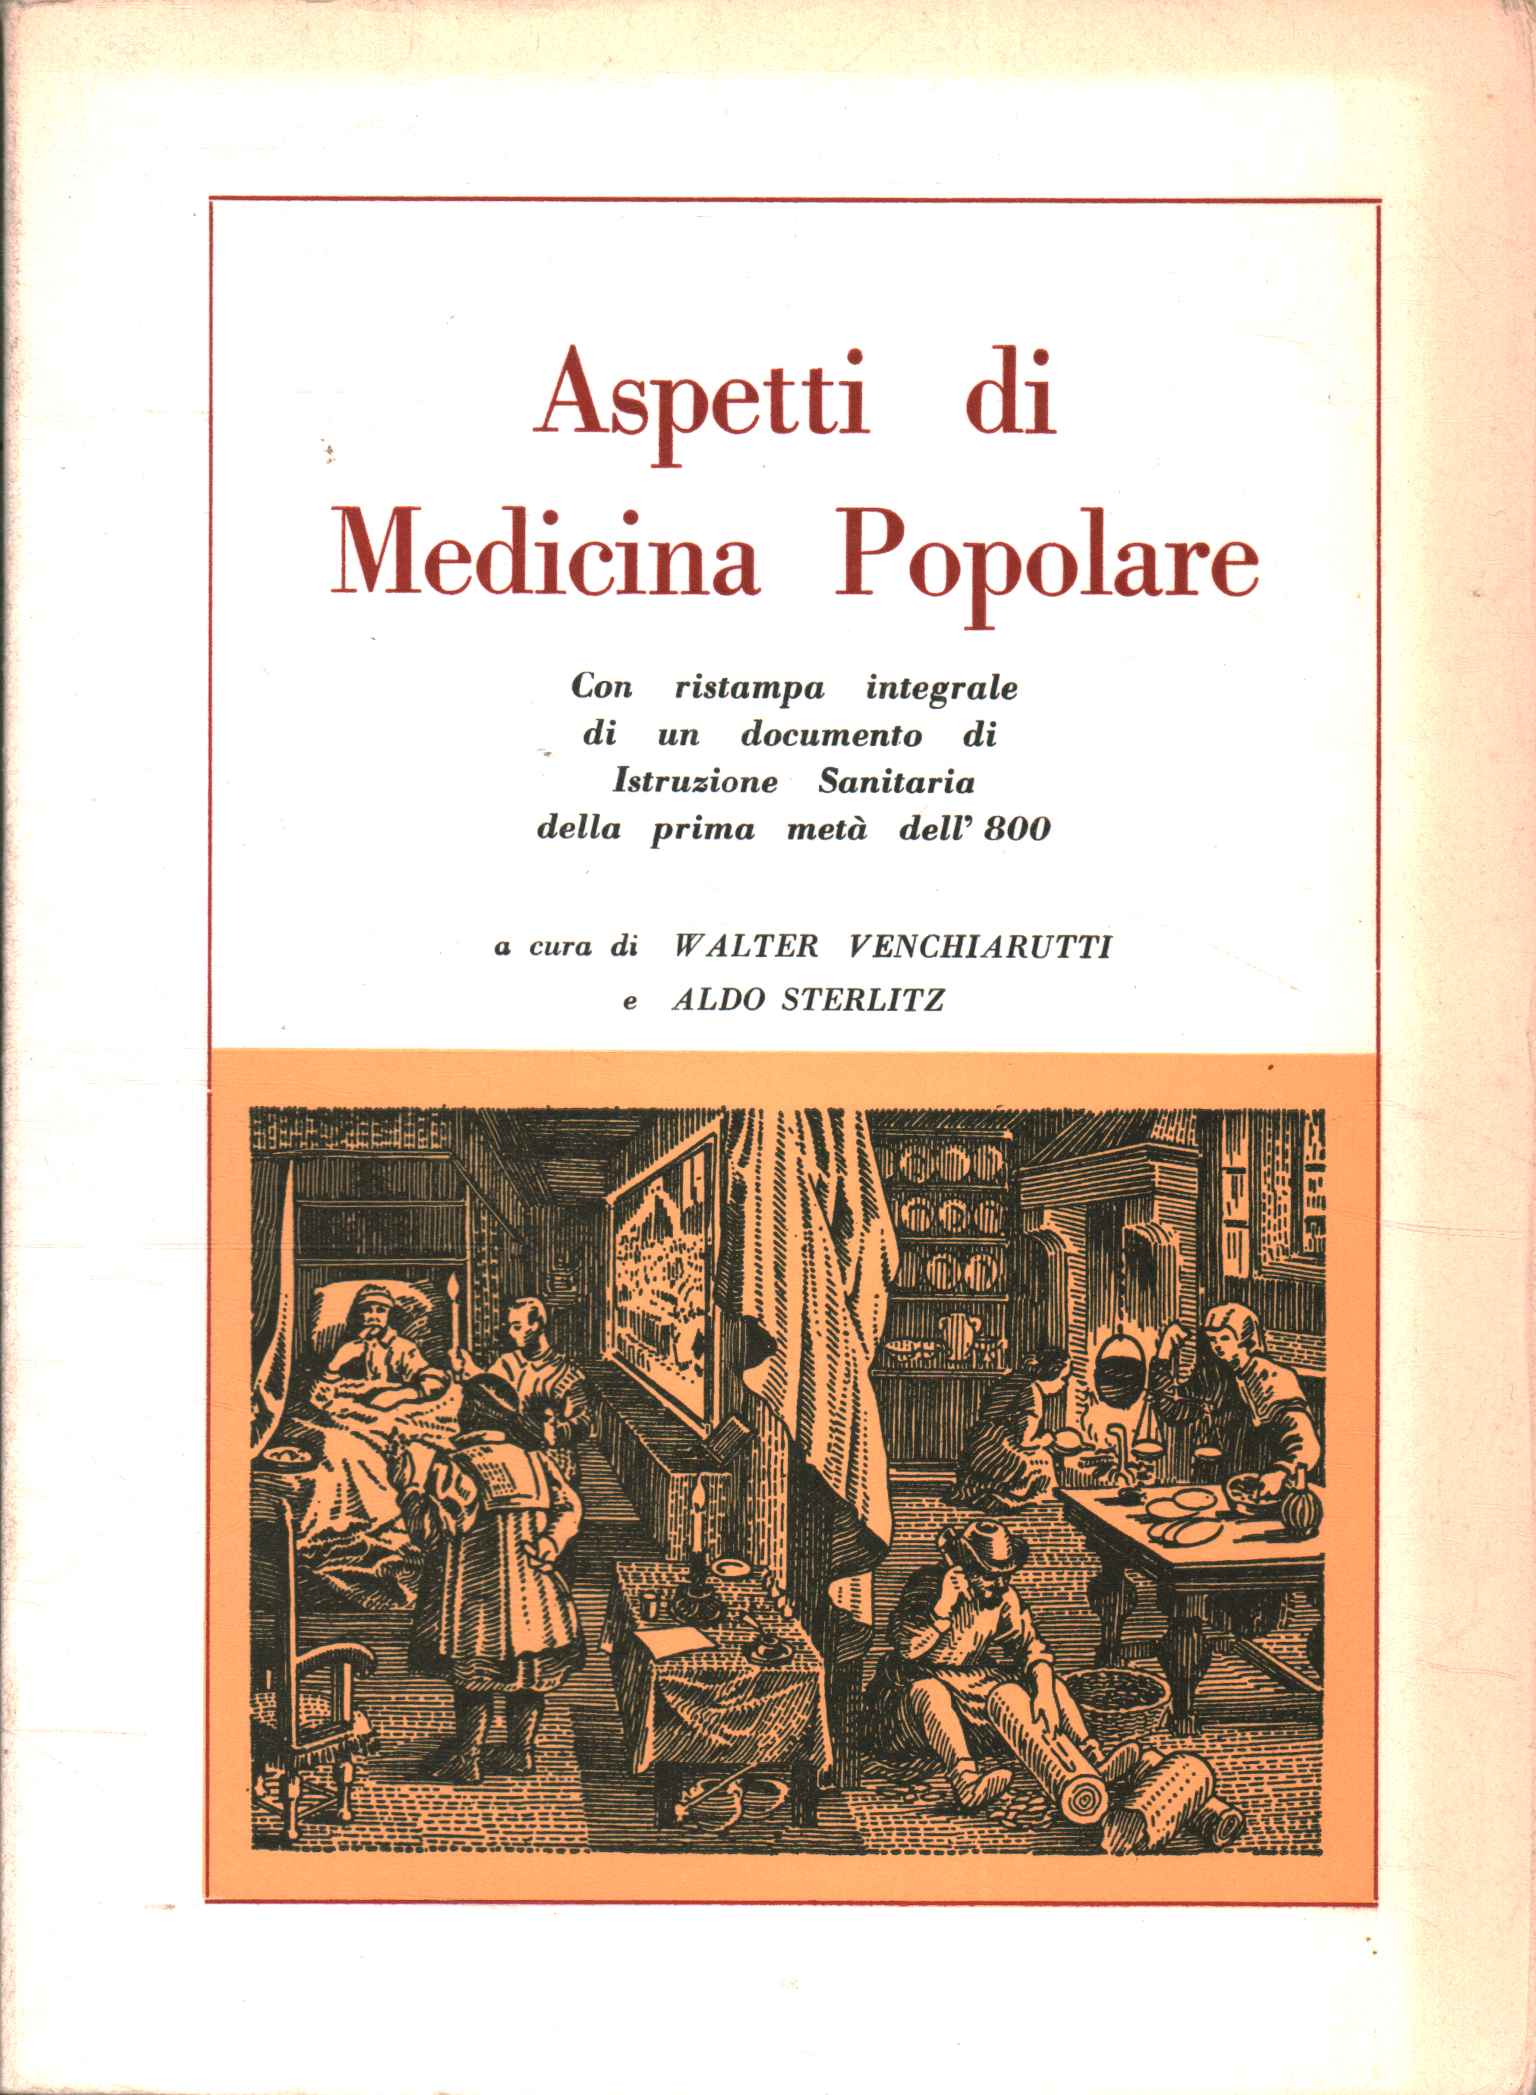 Aspects of Popular Medicine